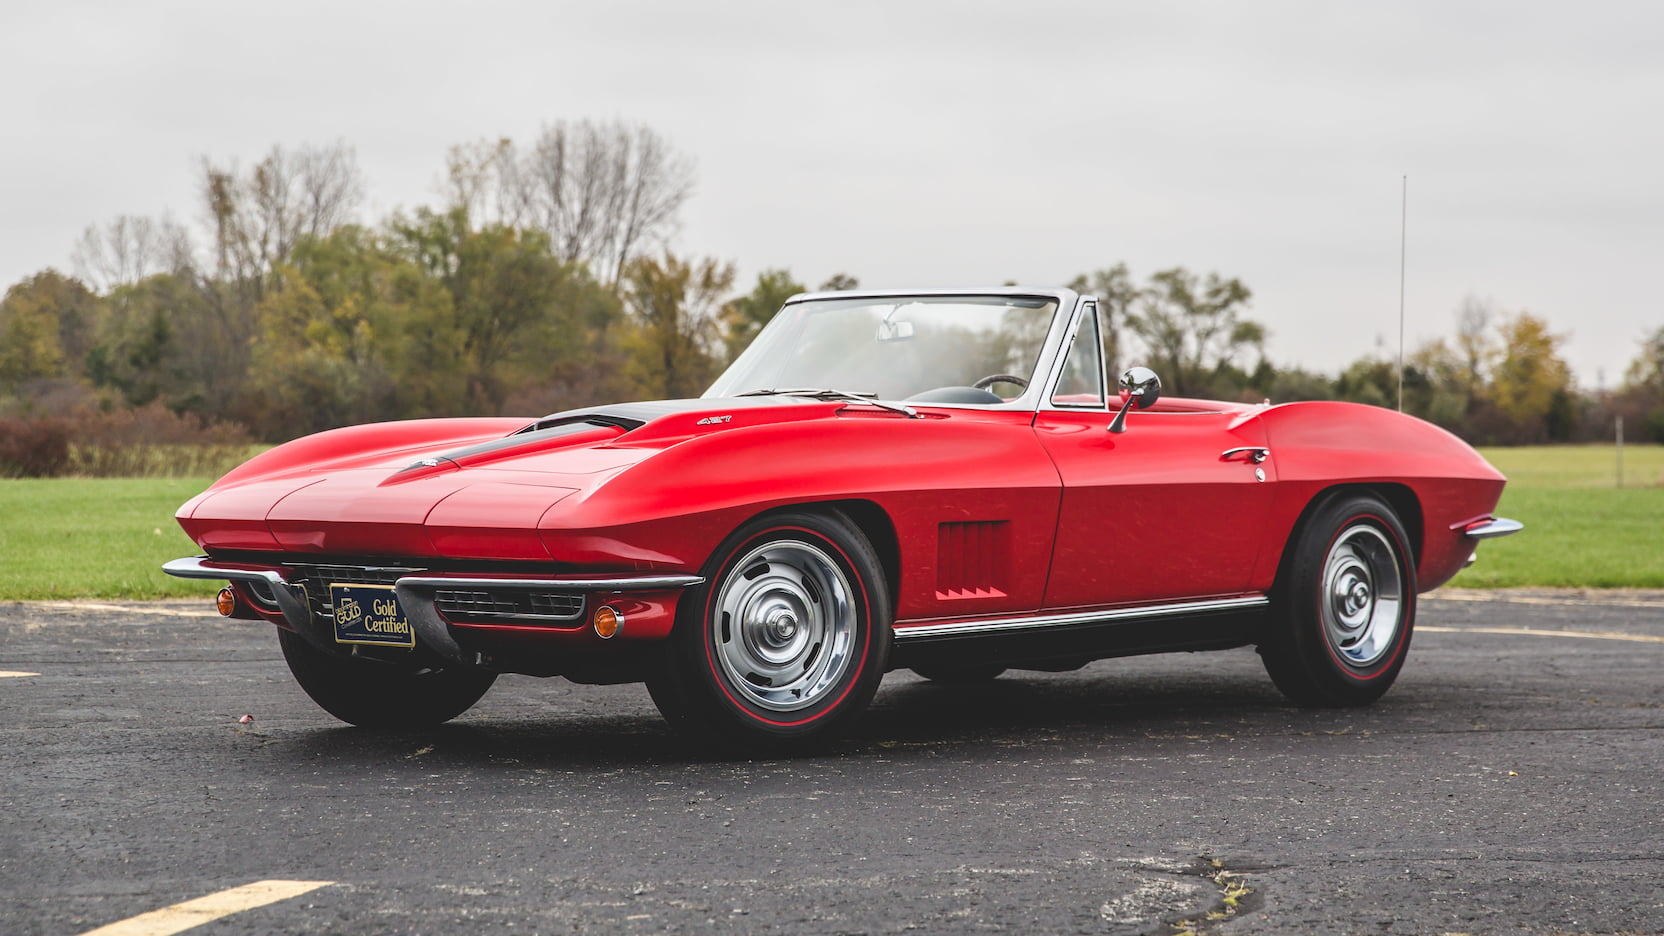 Corvette Of The Day: 1967 Chevrolet Corvette Convertible